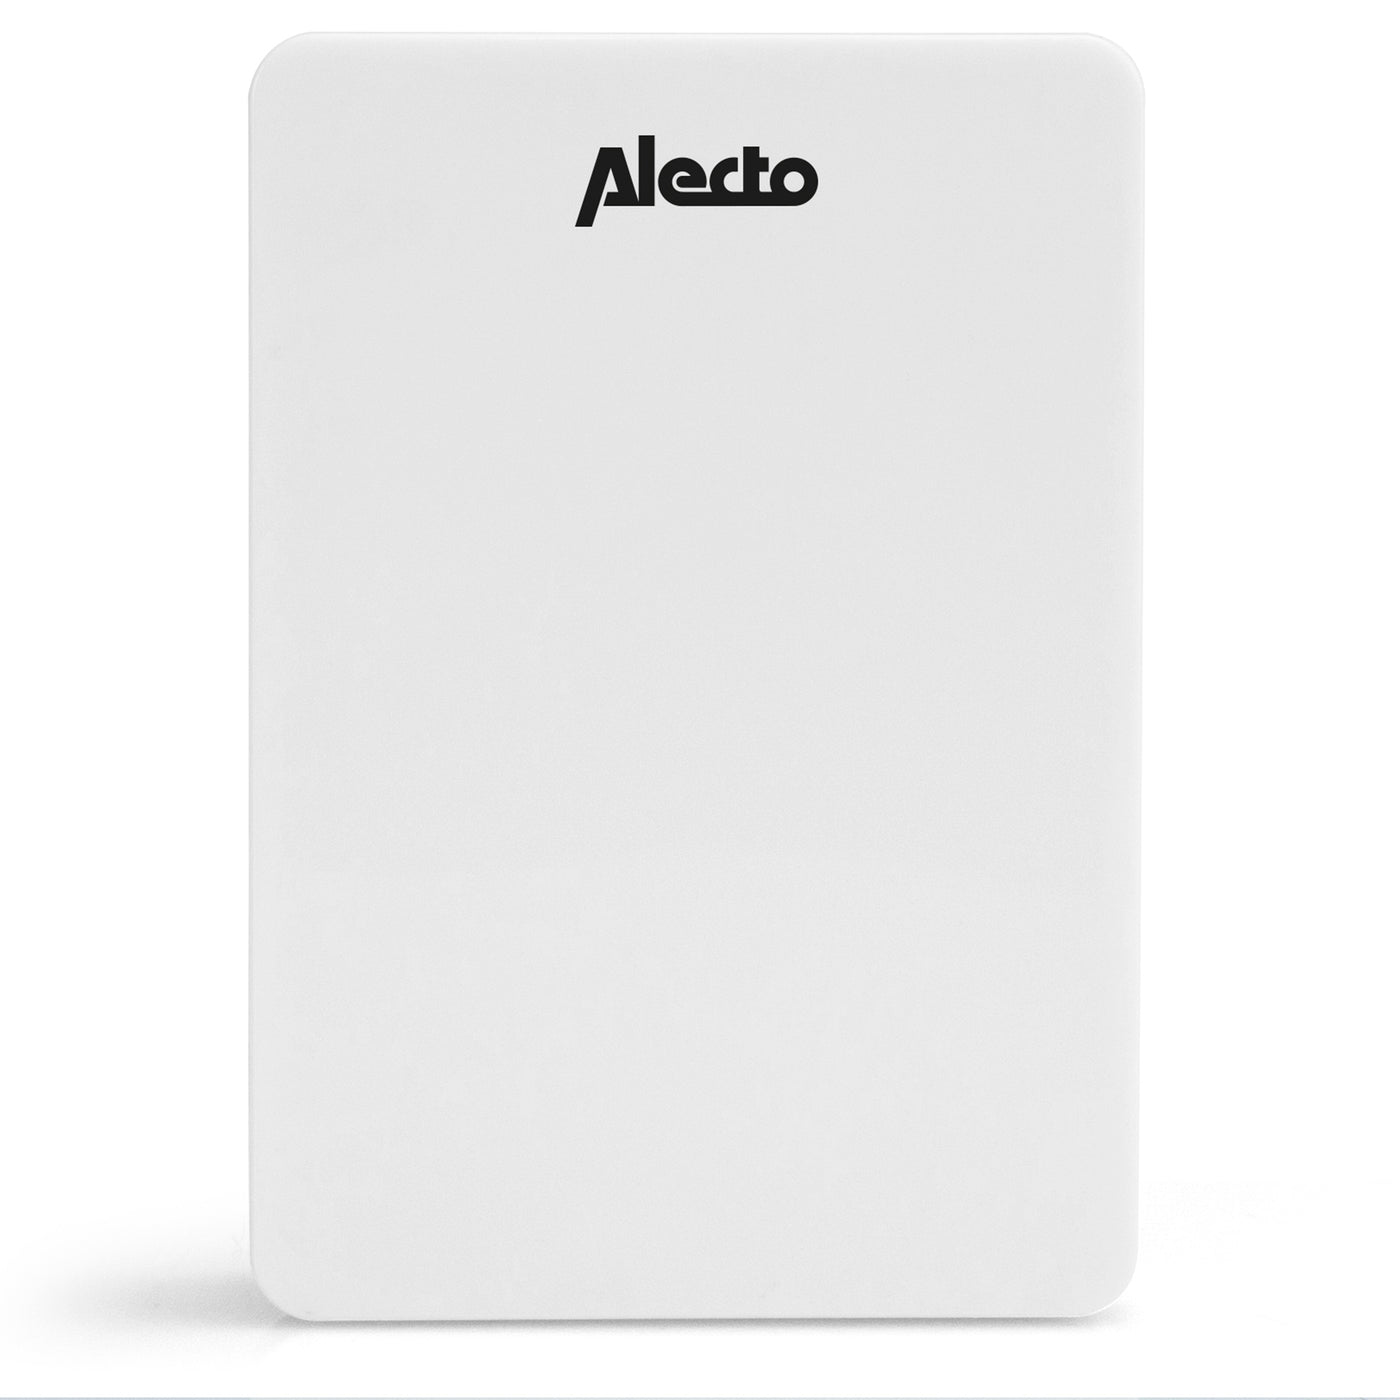 Alecto ADB-11WT - Draadloze deurbel, wit